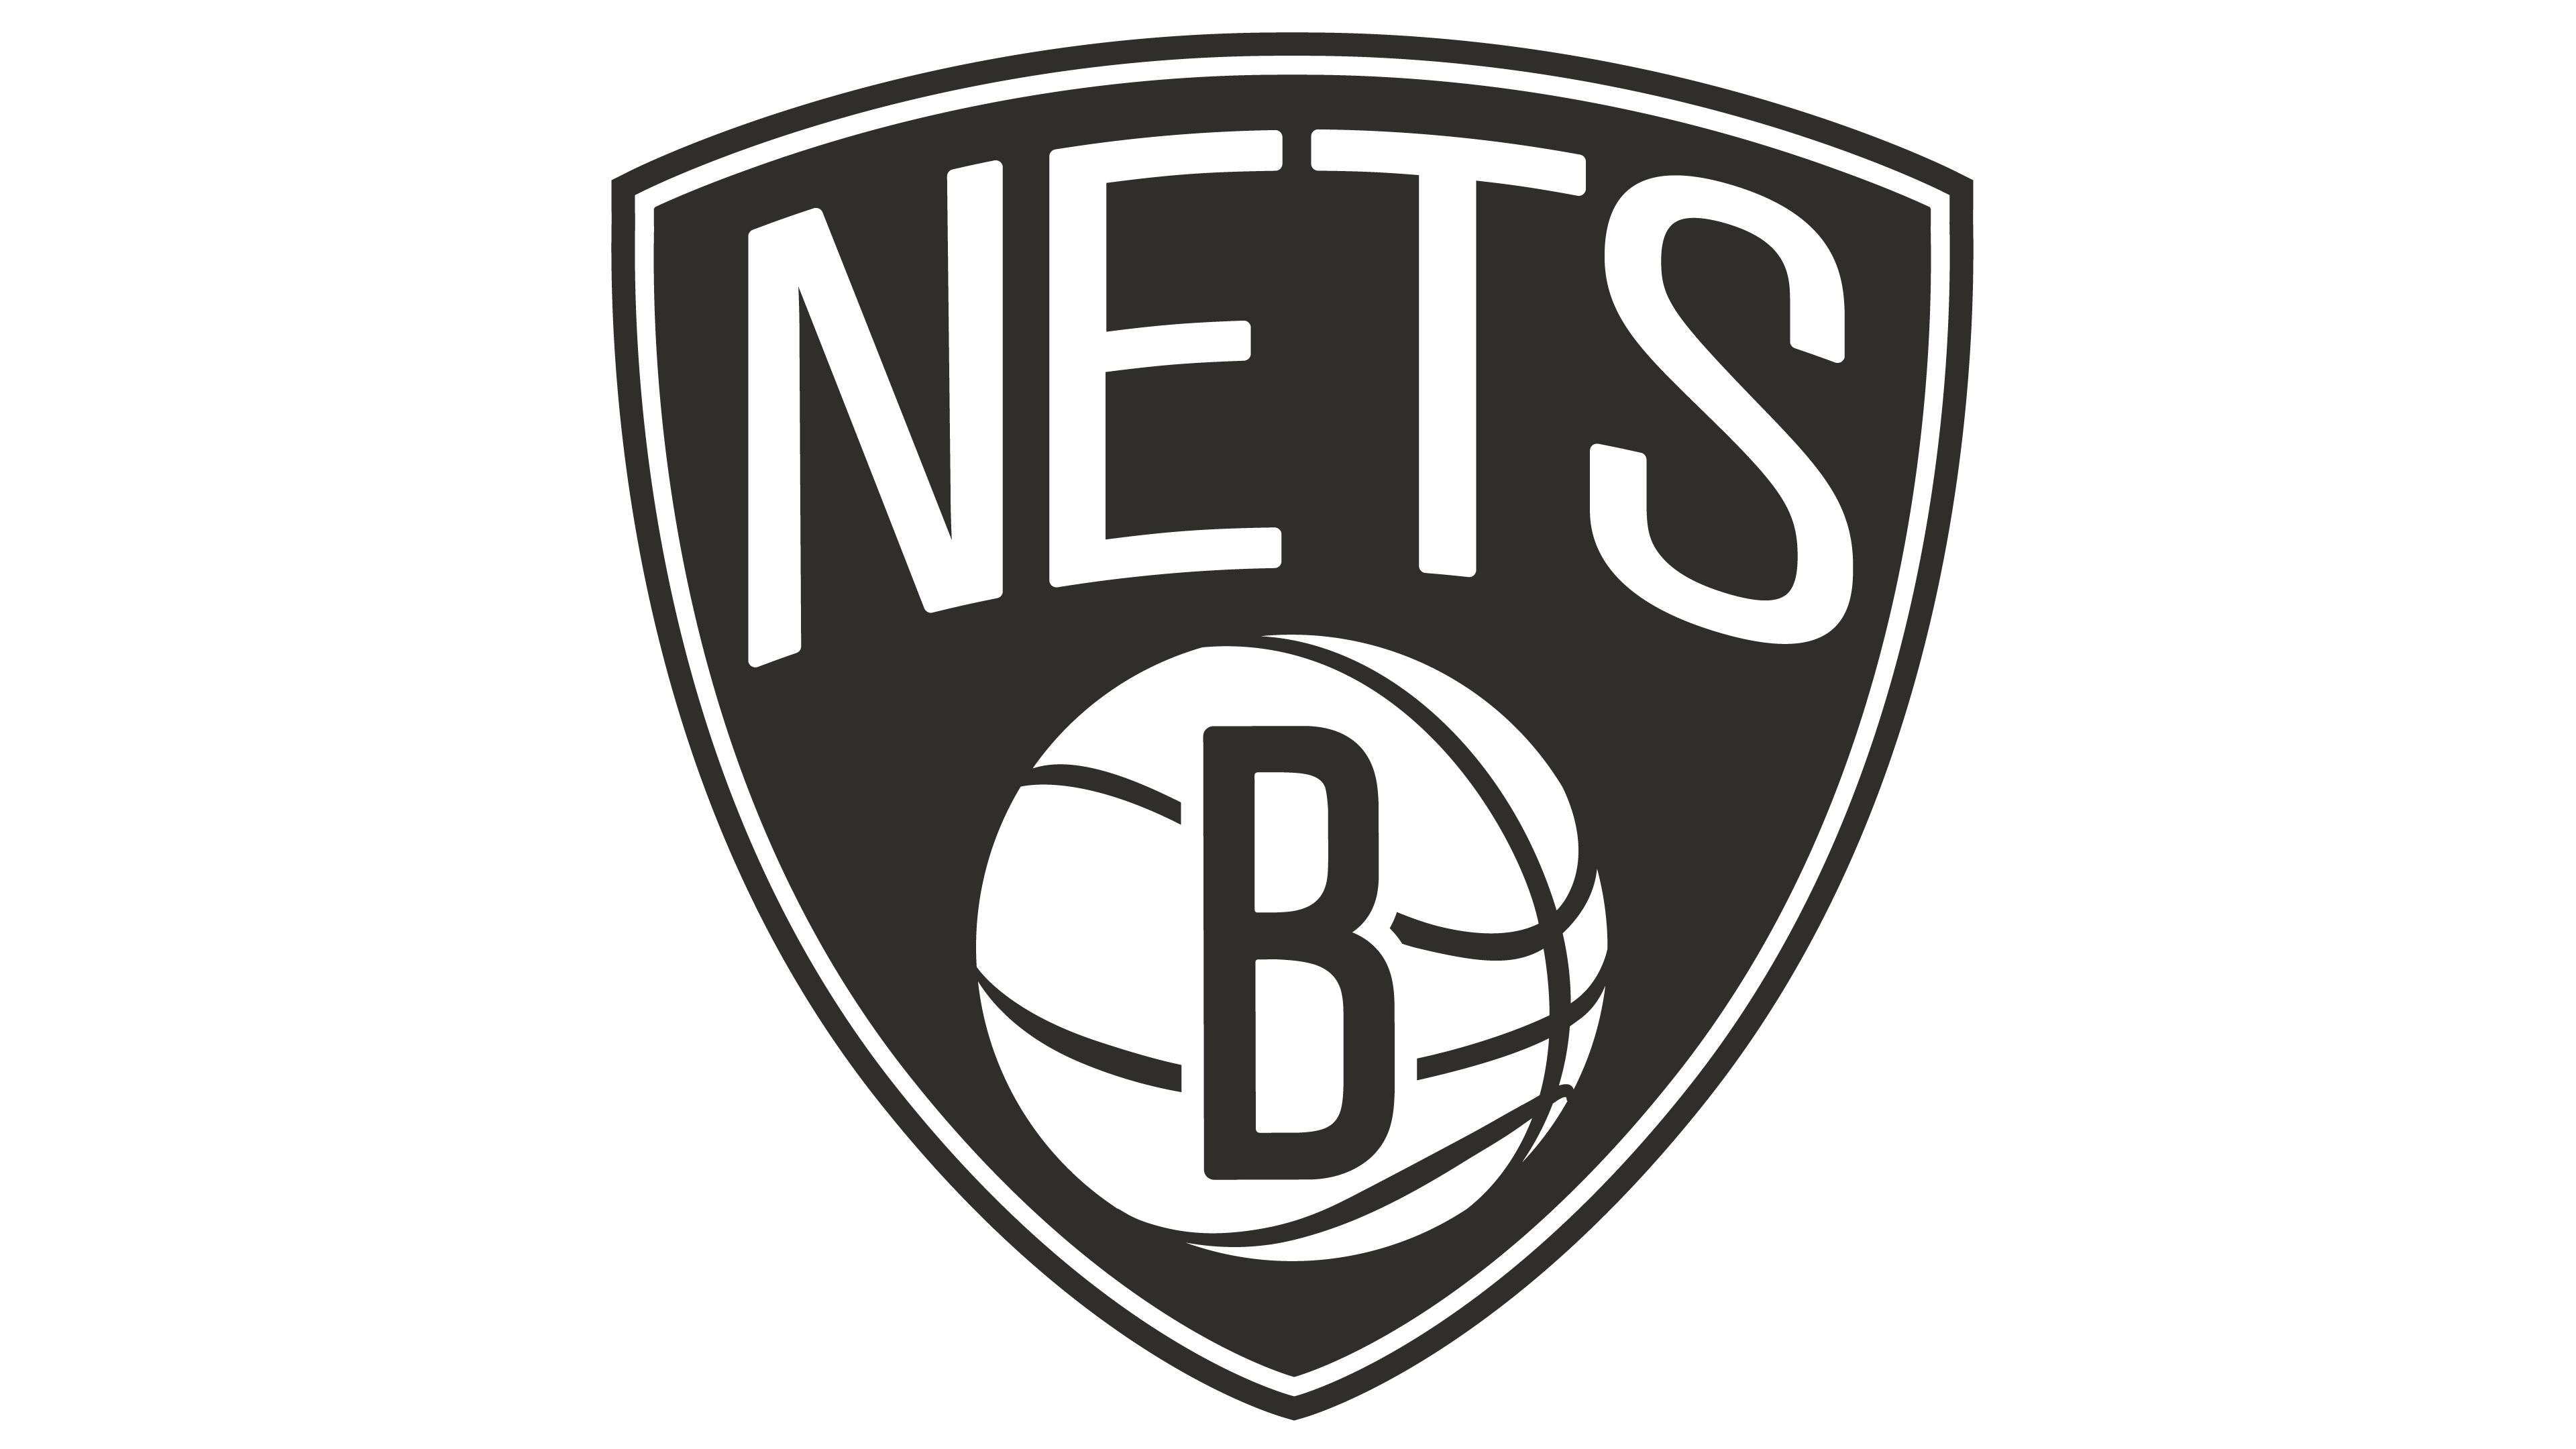 Nets Logo - Brooklyn Nets logo History of the Team Name and emblem